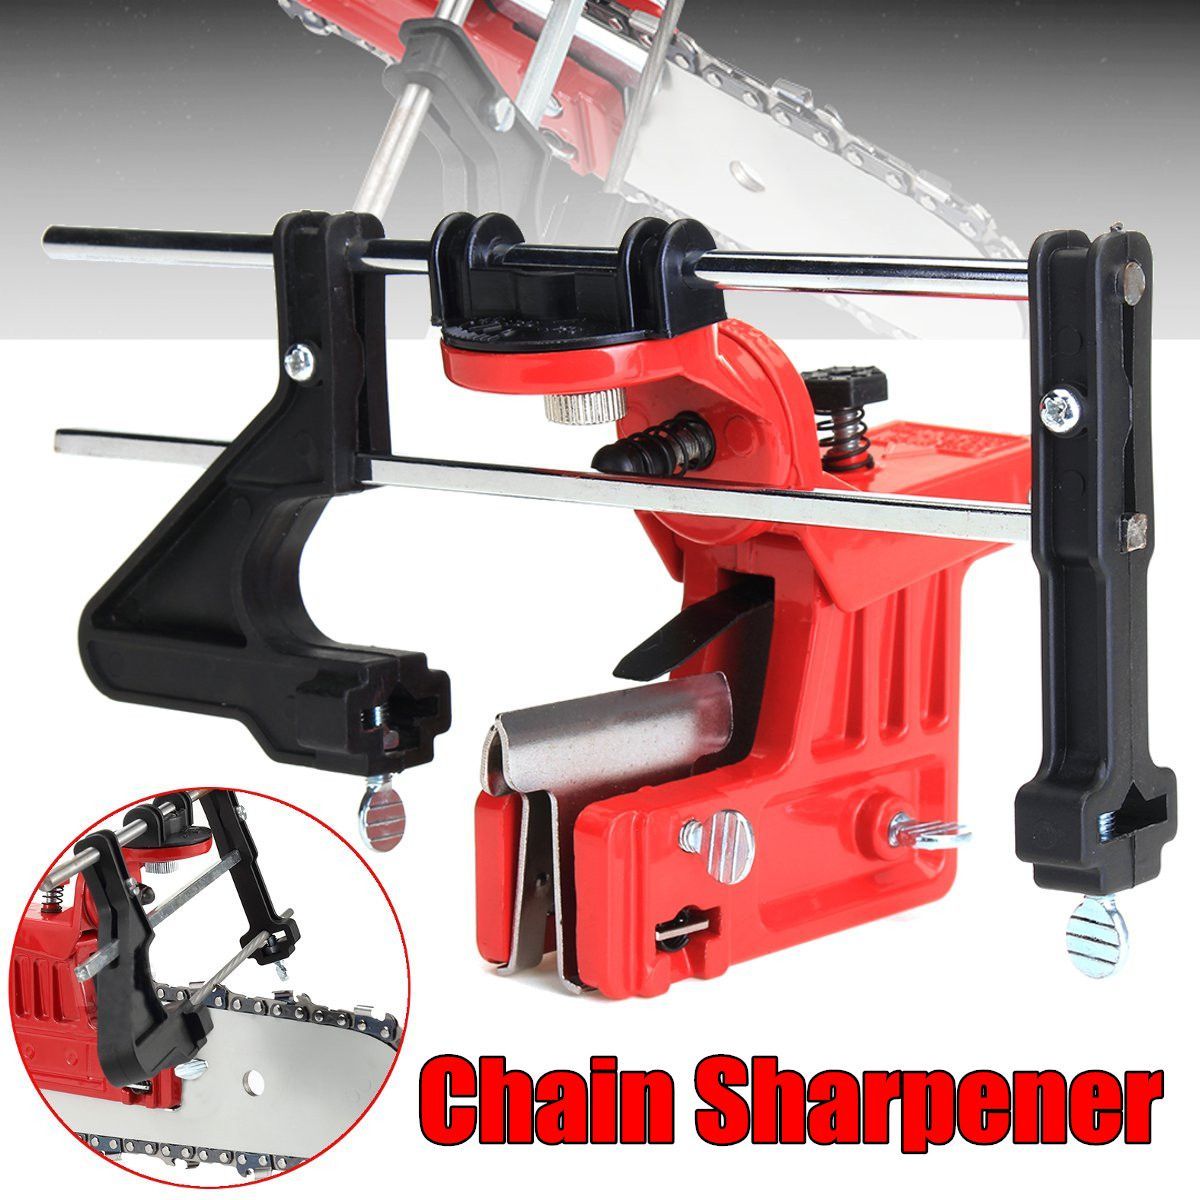 Professional-Filing-Guide-Tecomec-Super-Rapid-Chainsaw-Sharpening-File-Chain-Sharpener-Tools-Kit-1290168